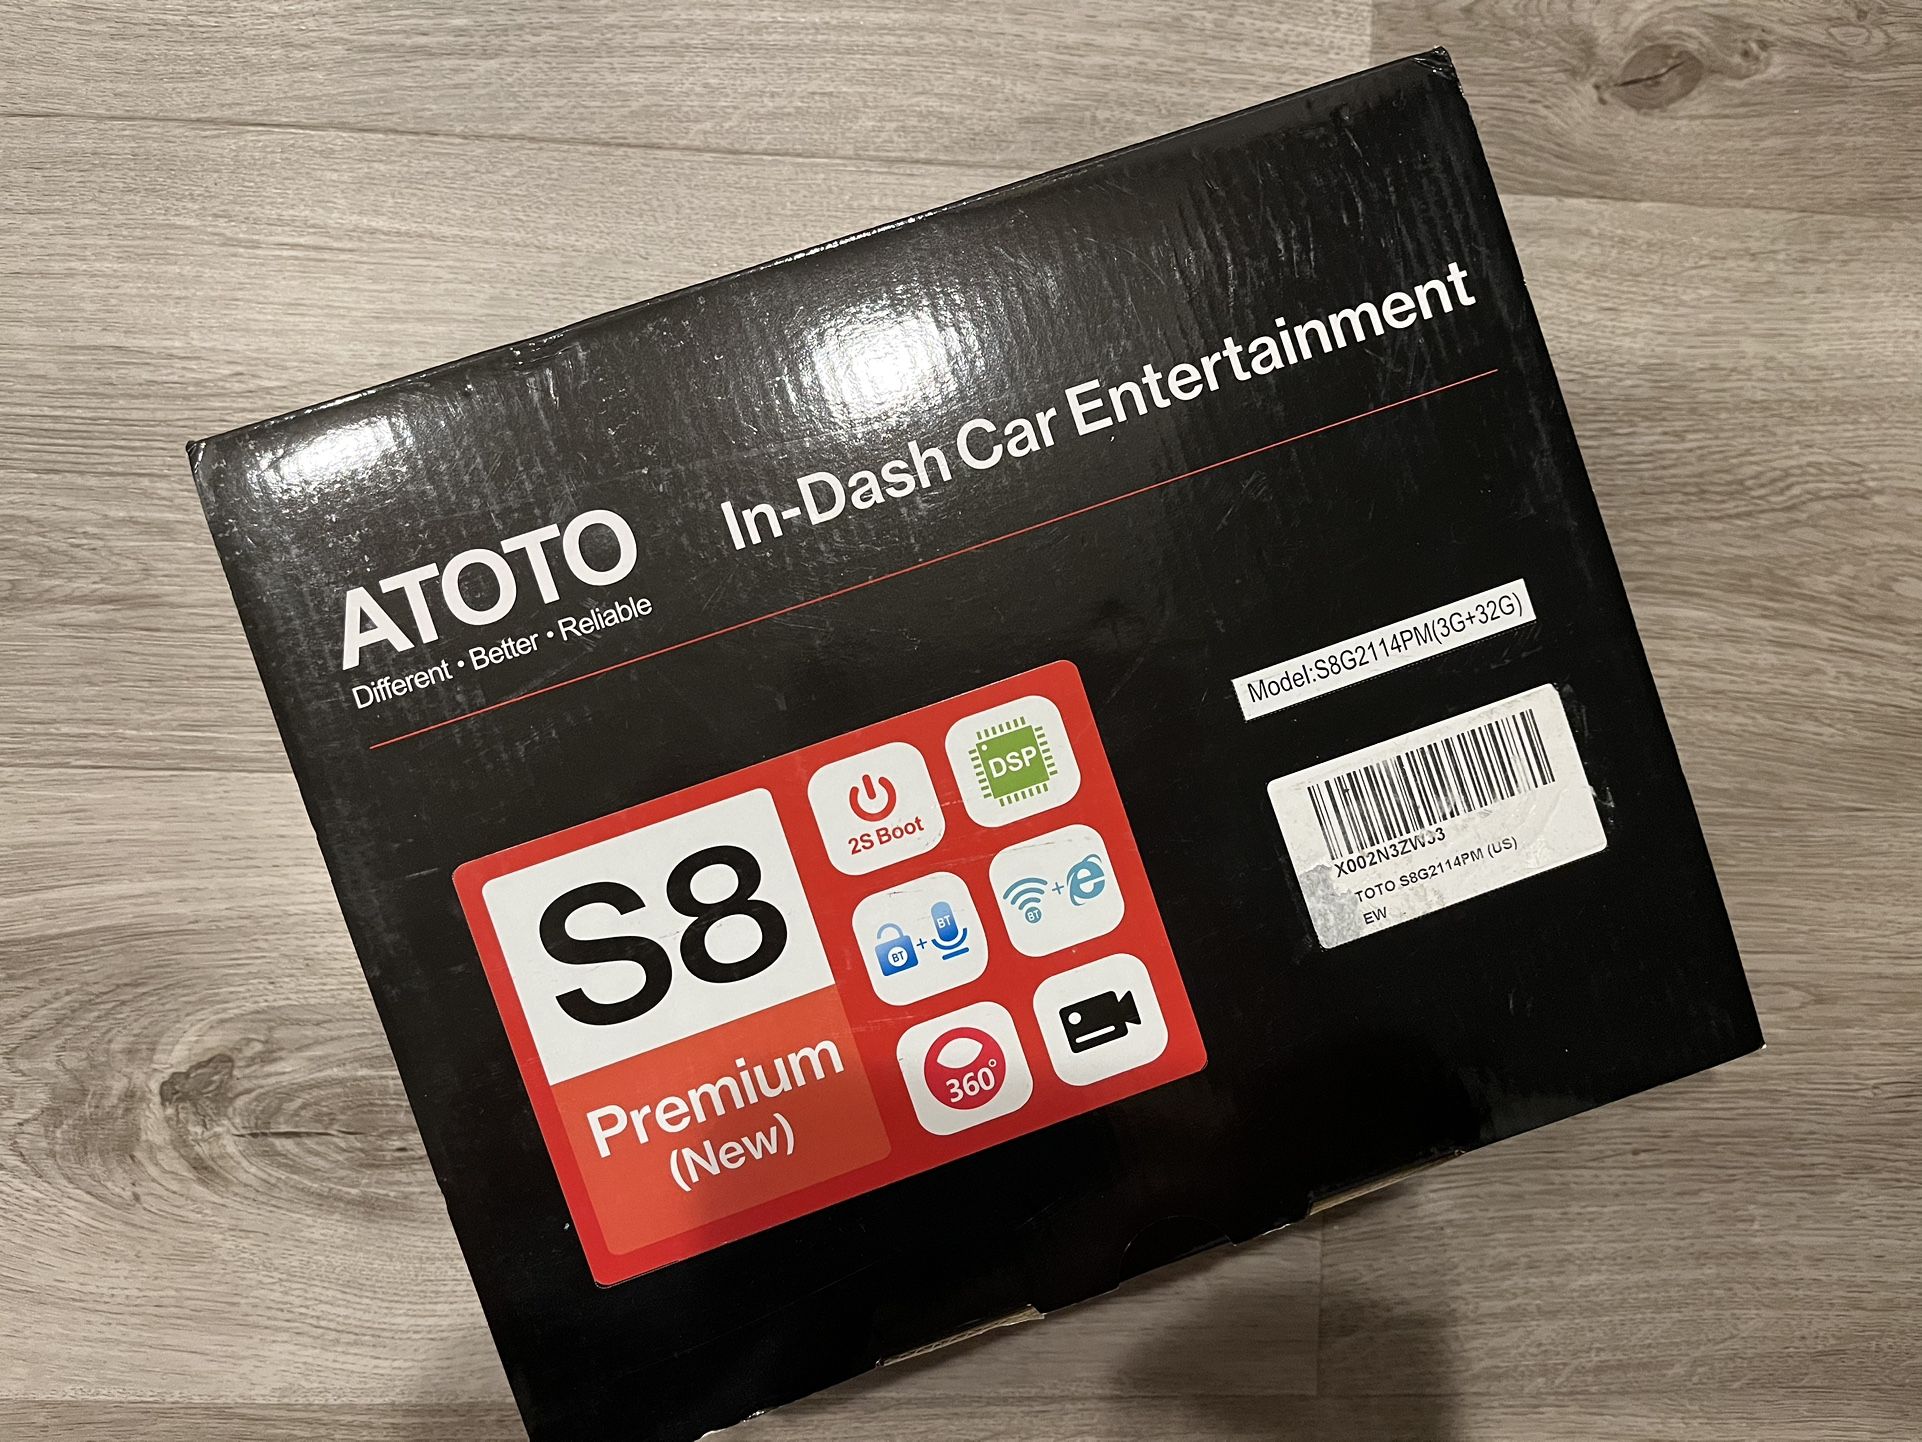 ATOTO S8 Premium Car Entertainment S8G2114PM(3G+32G) for